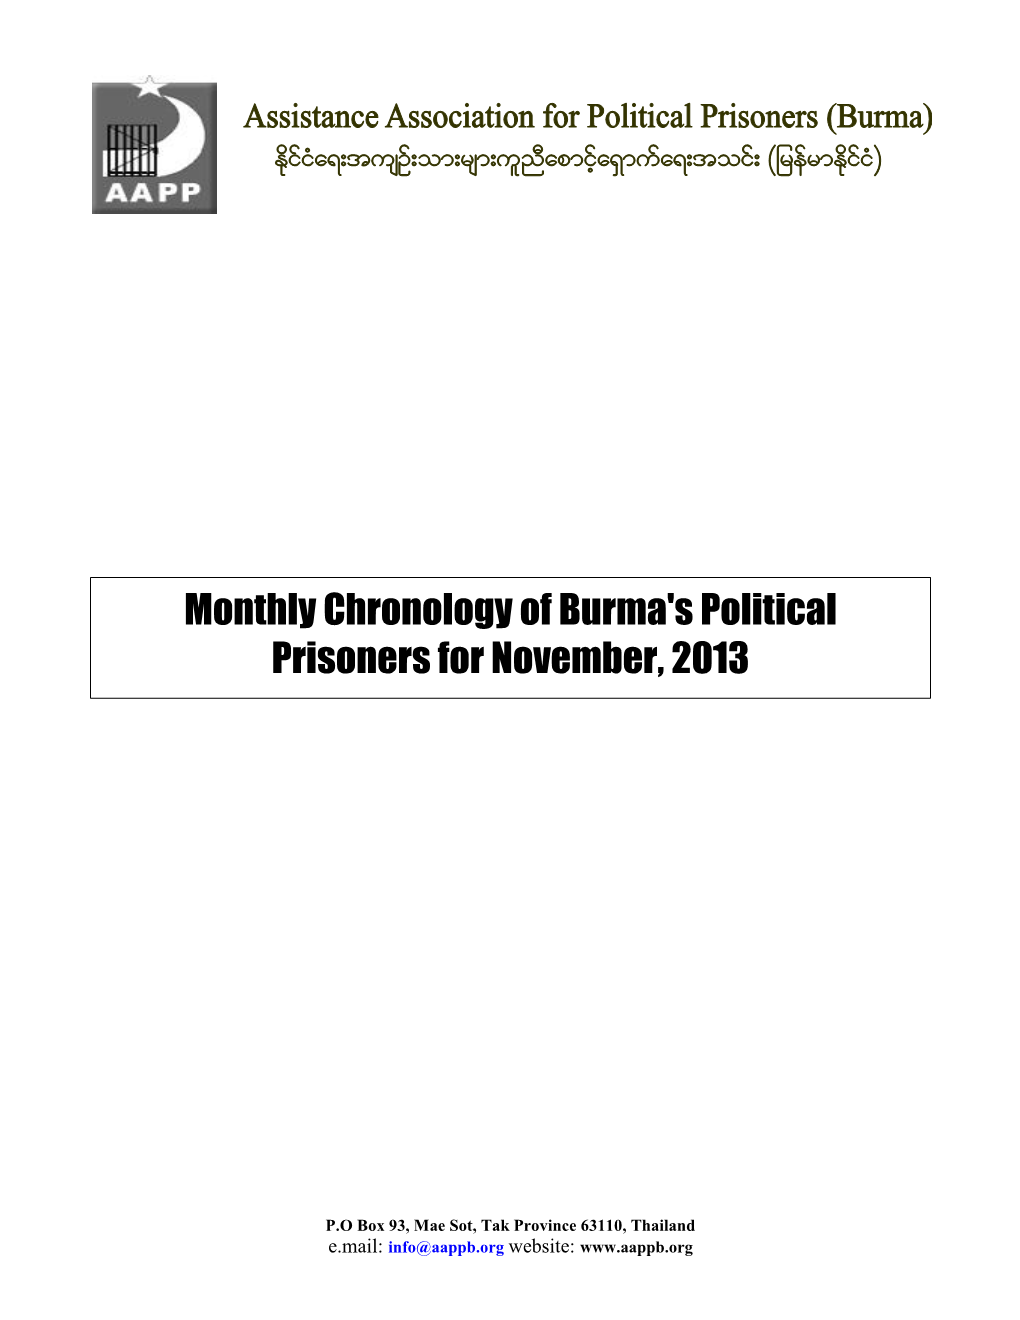 Monthly Chronology of Burma's Political Prisoners for November